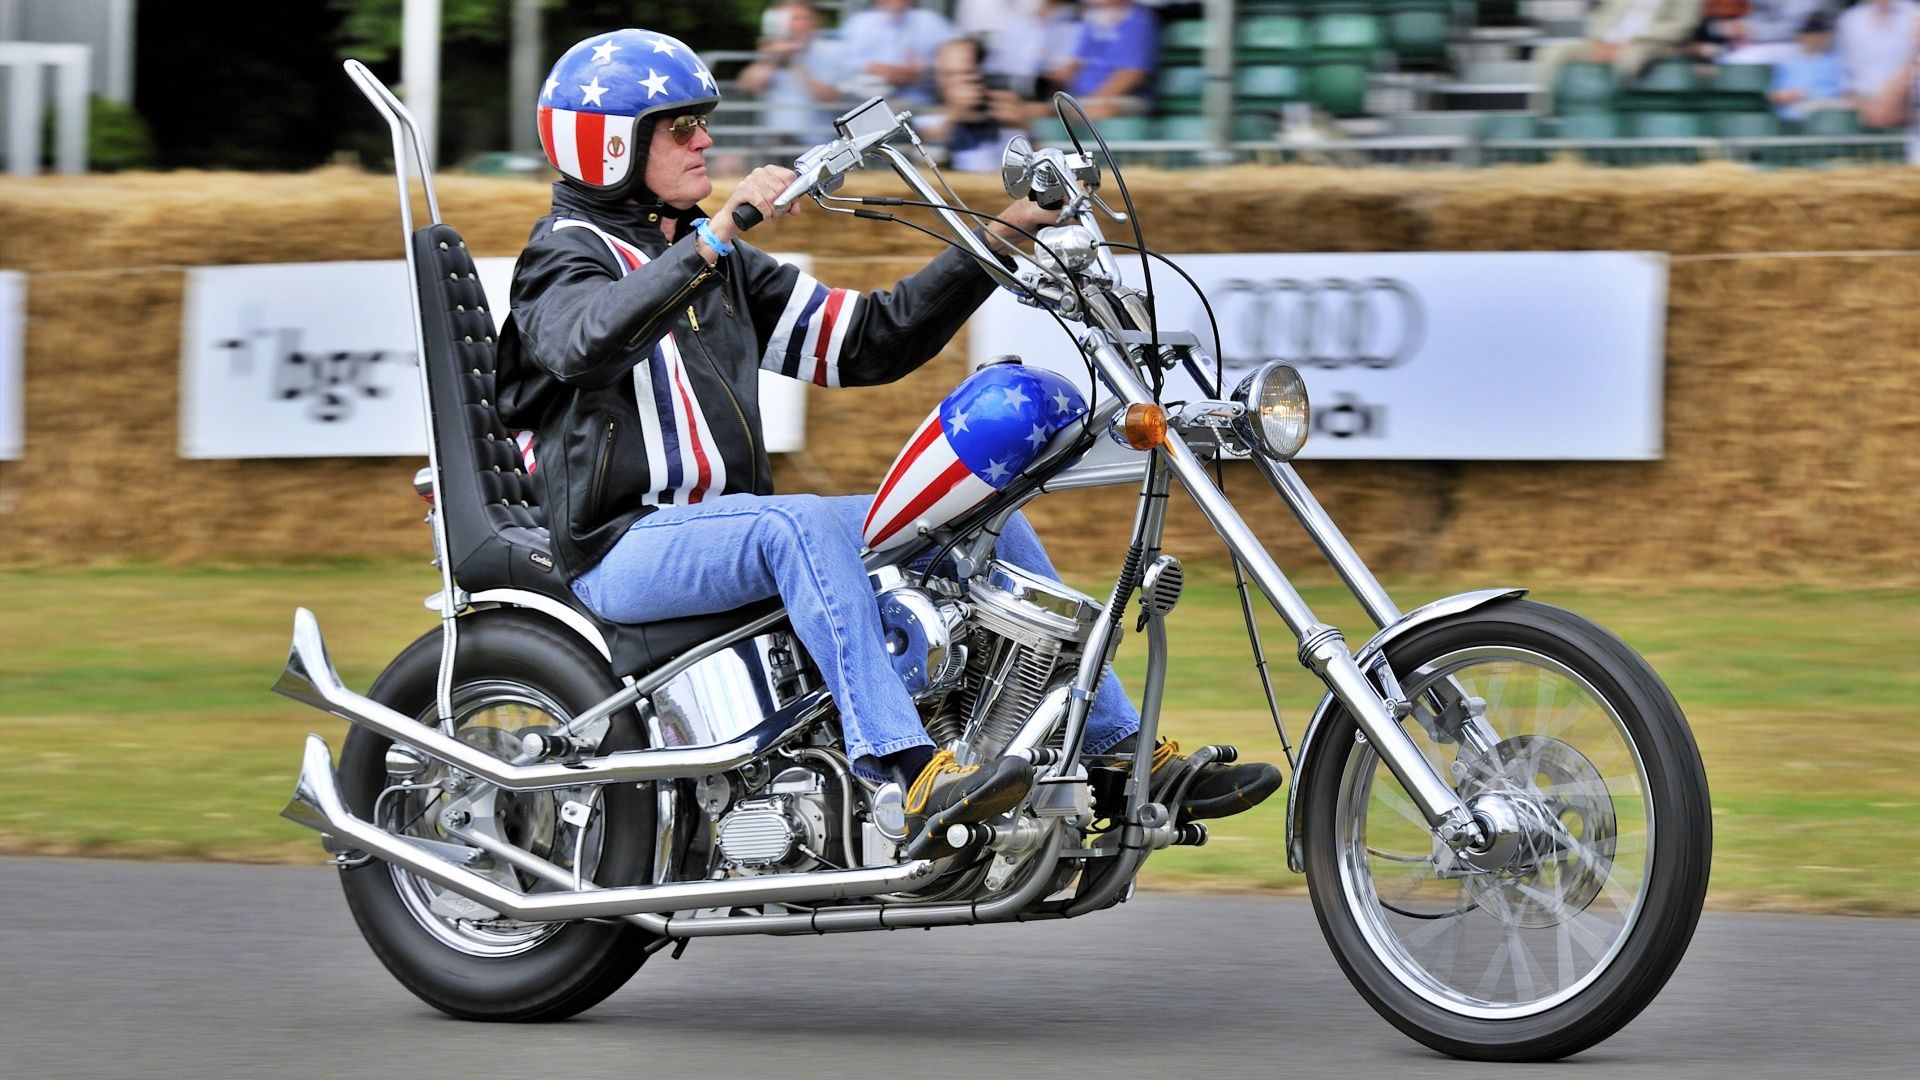 Peter Fonda riding the Captain America Chopper